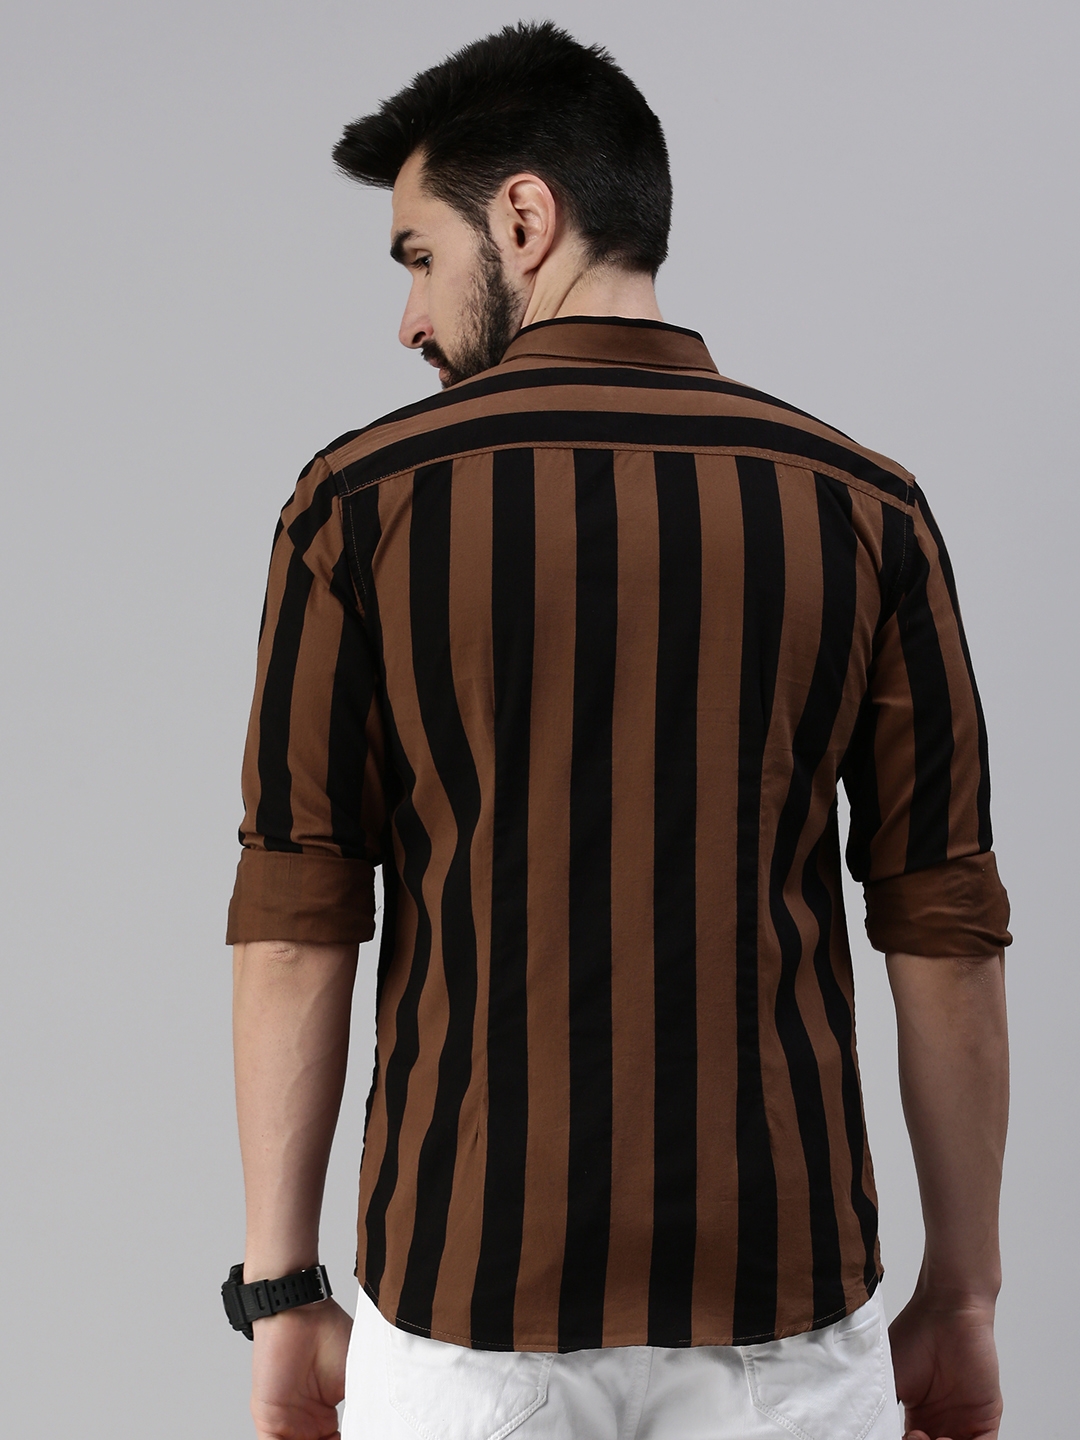 SHOWOFF Men's Casual Slim Collar Brown Striped Shirt